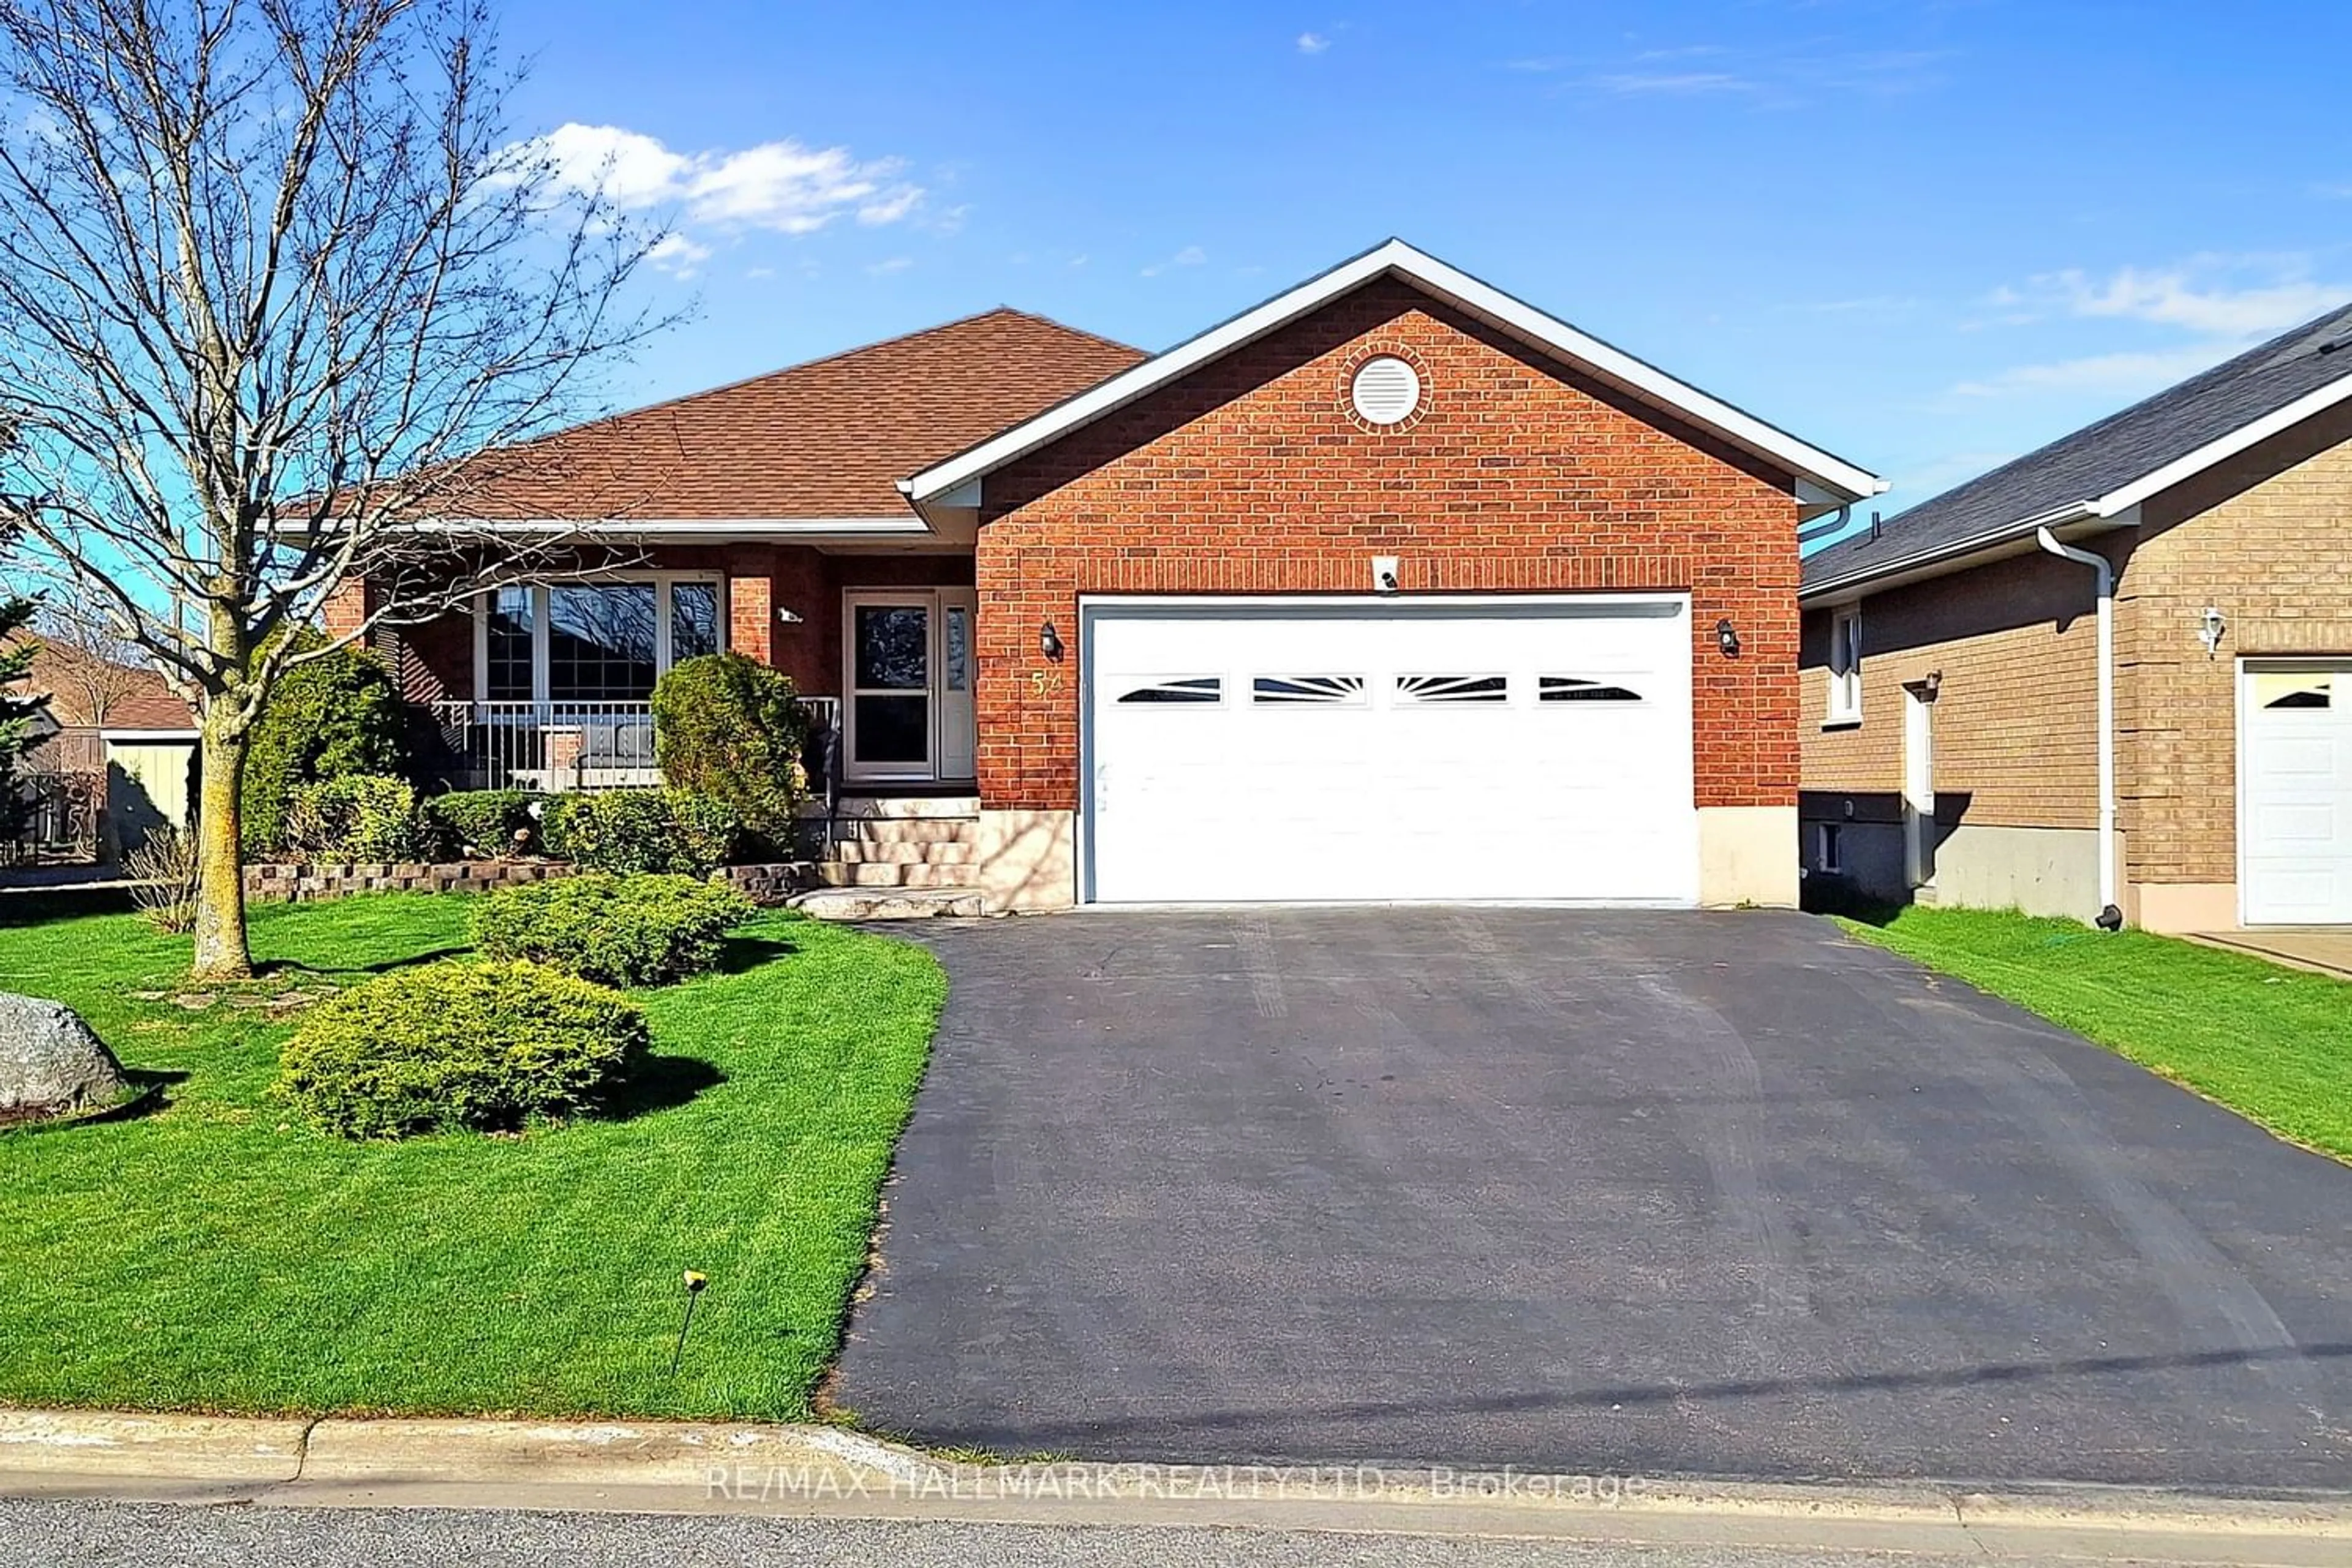 Home with brick exterior material for 54 Eakins Crt, Kawartha Lakes Ontario K9V 6J9